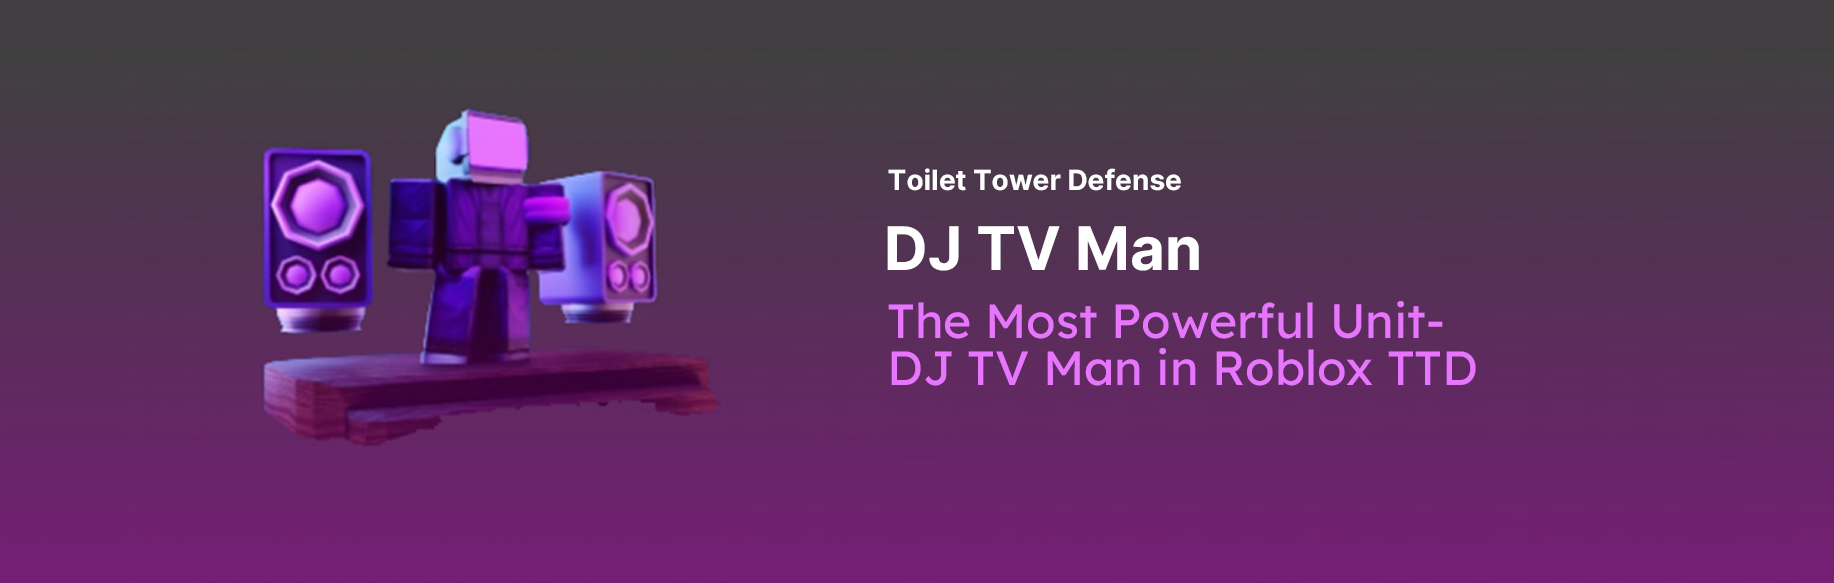 The Most Powerful Unit-DJ TV Man in Roblox TTD